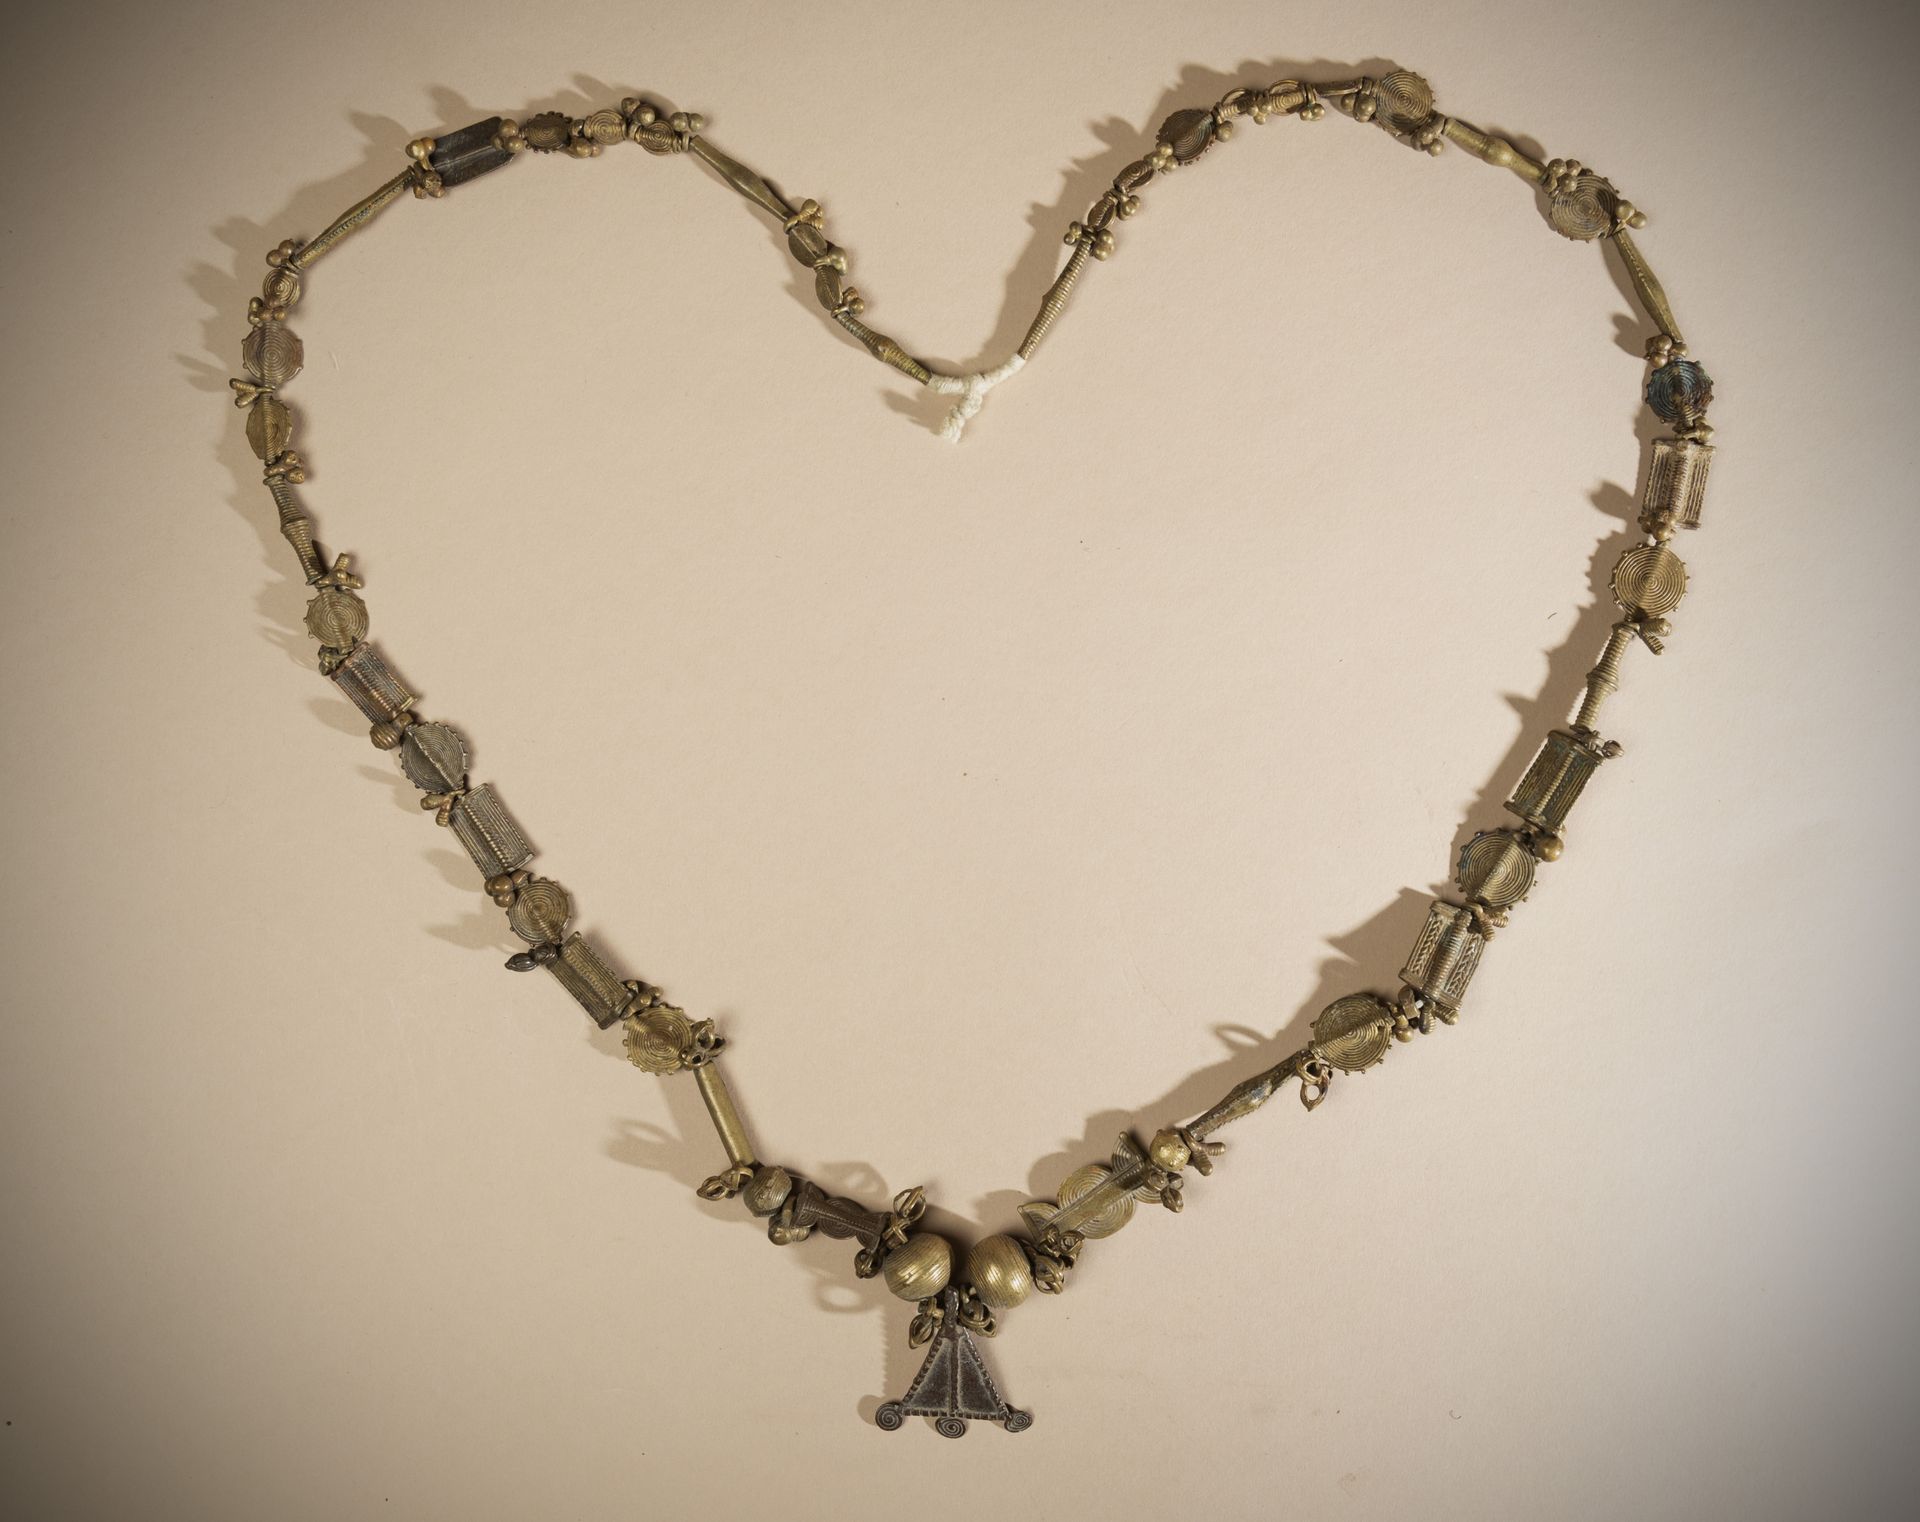 Null 巴乌尔（象牙海岸）

古老的圆形和长方形珠子组成的美丽项链，采用失蜡青铜材质。

前阿兰-普罗沃特收藏

长度：58厘米